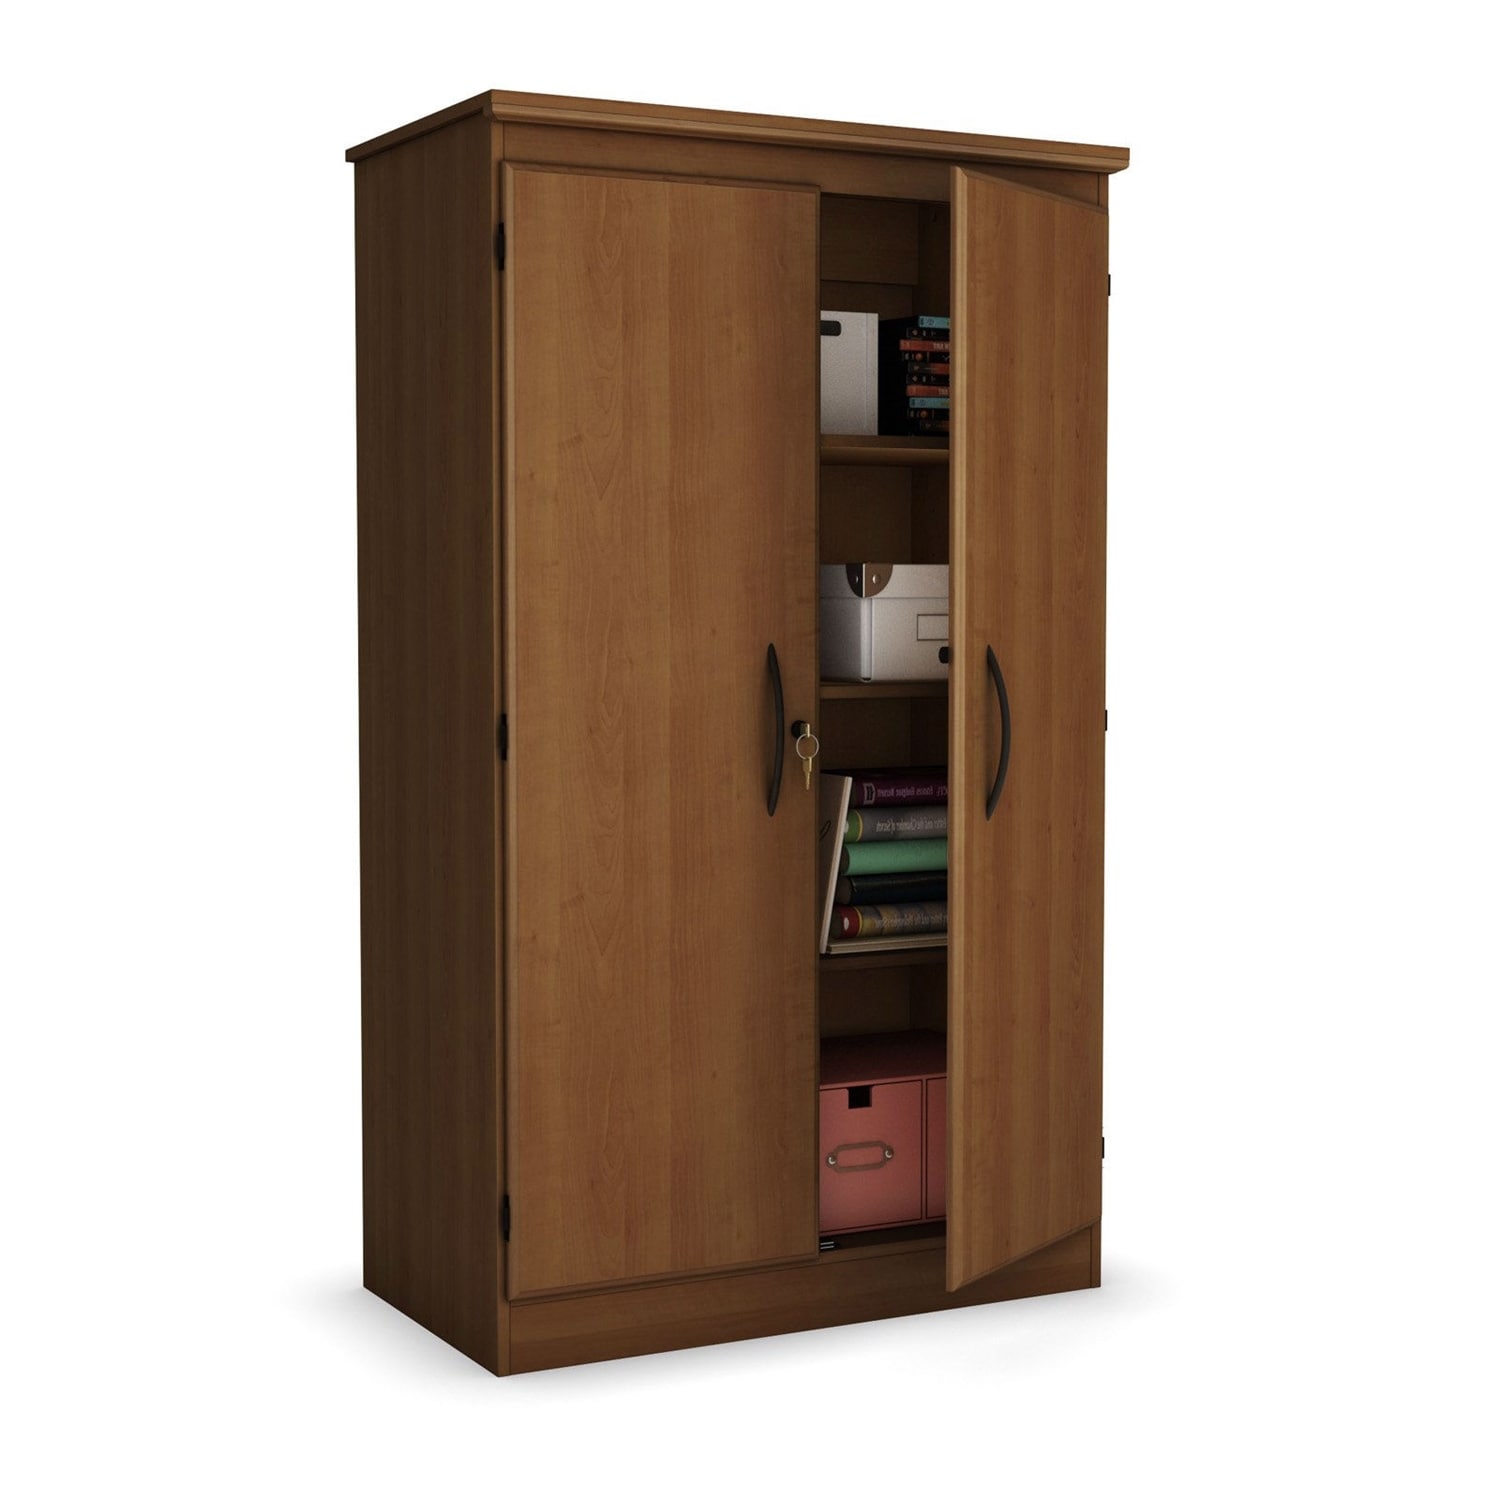 Cherry 2 Door Storage Cabinet Wardrobe Armoire For Bedroom Living Room Or Home Office